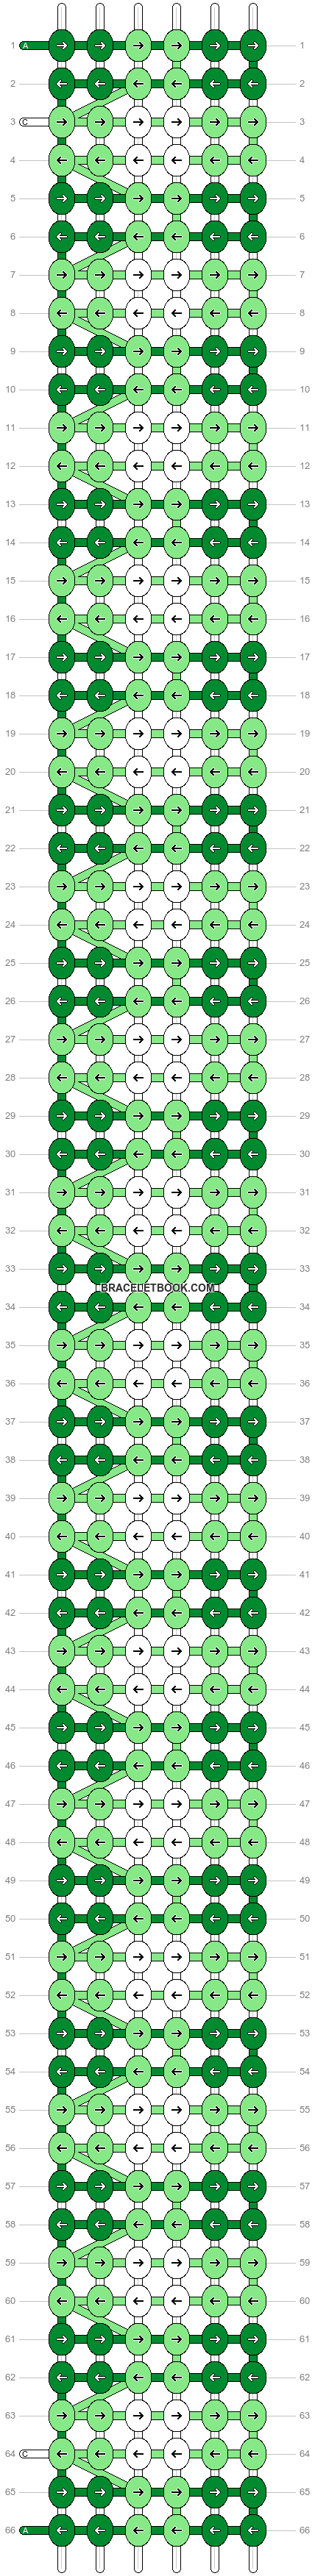 Alpha pattern #80755 variation #146808 pattern